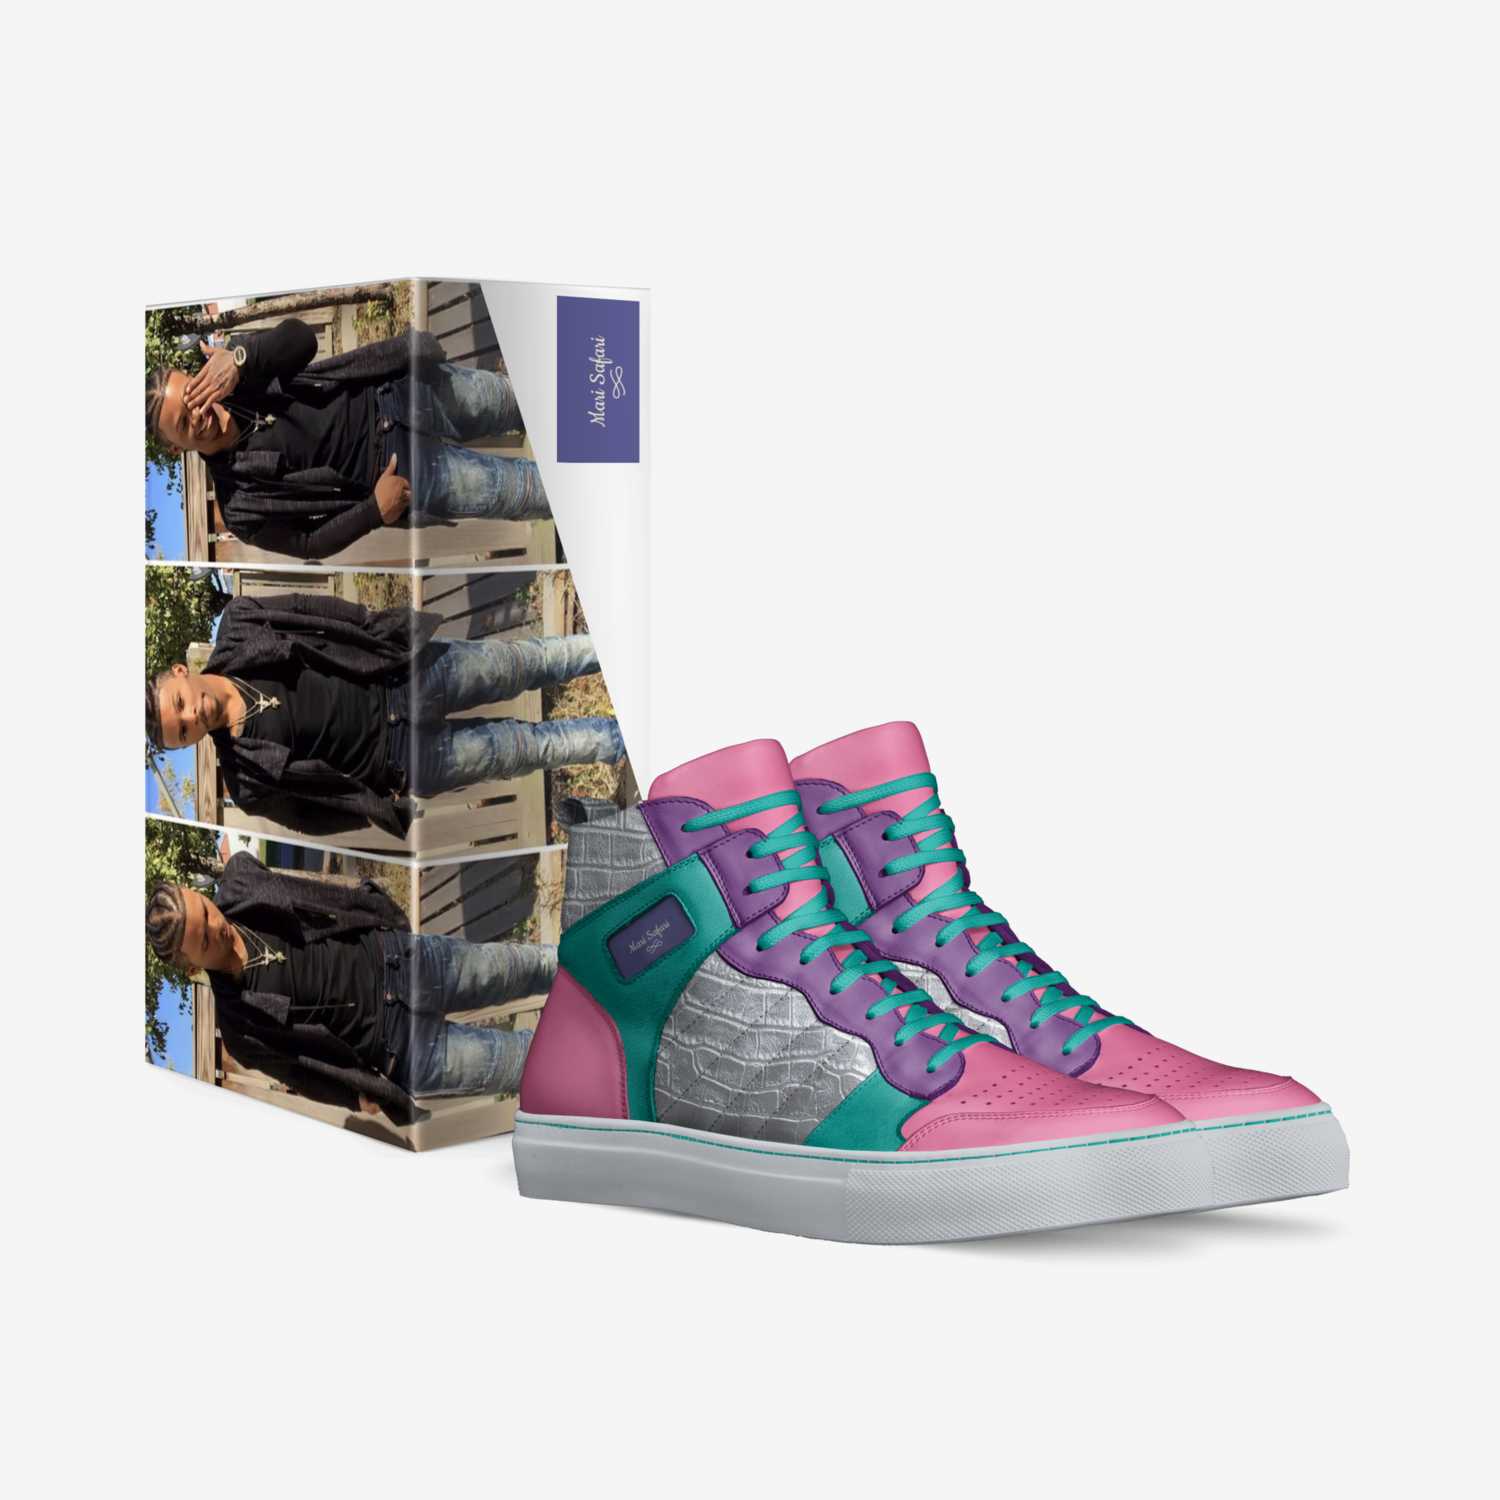 Mari Safari custom made in Italy shoes by Stephanie Edmerson | Box view